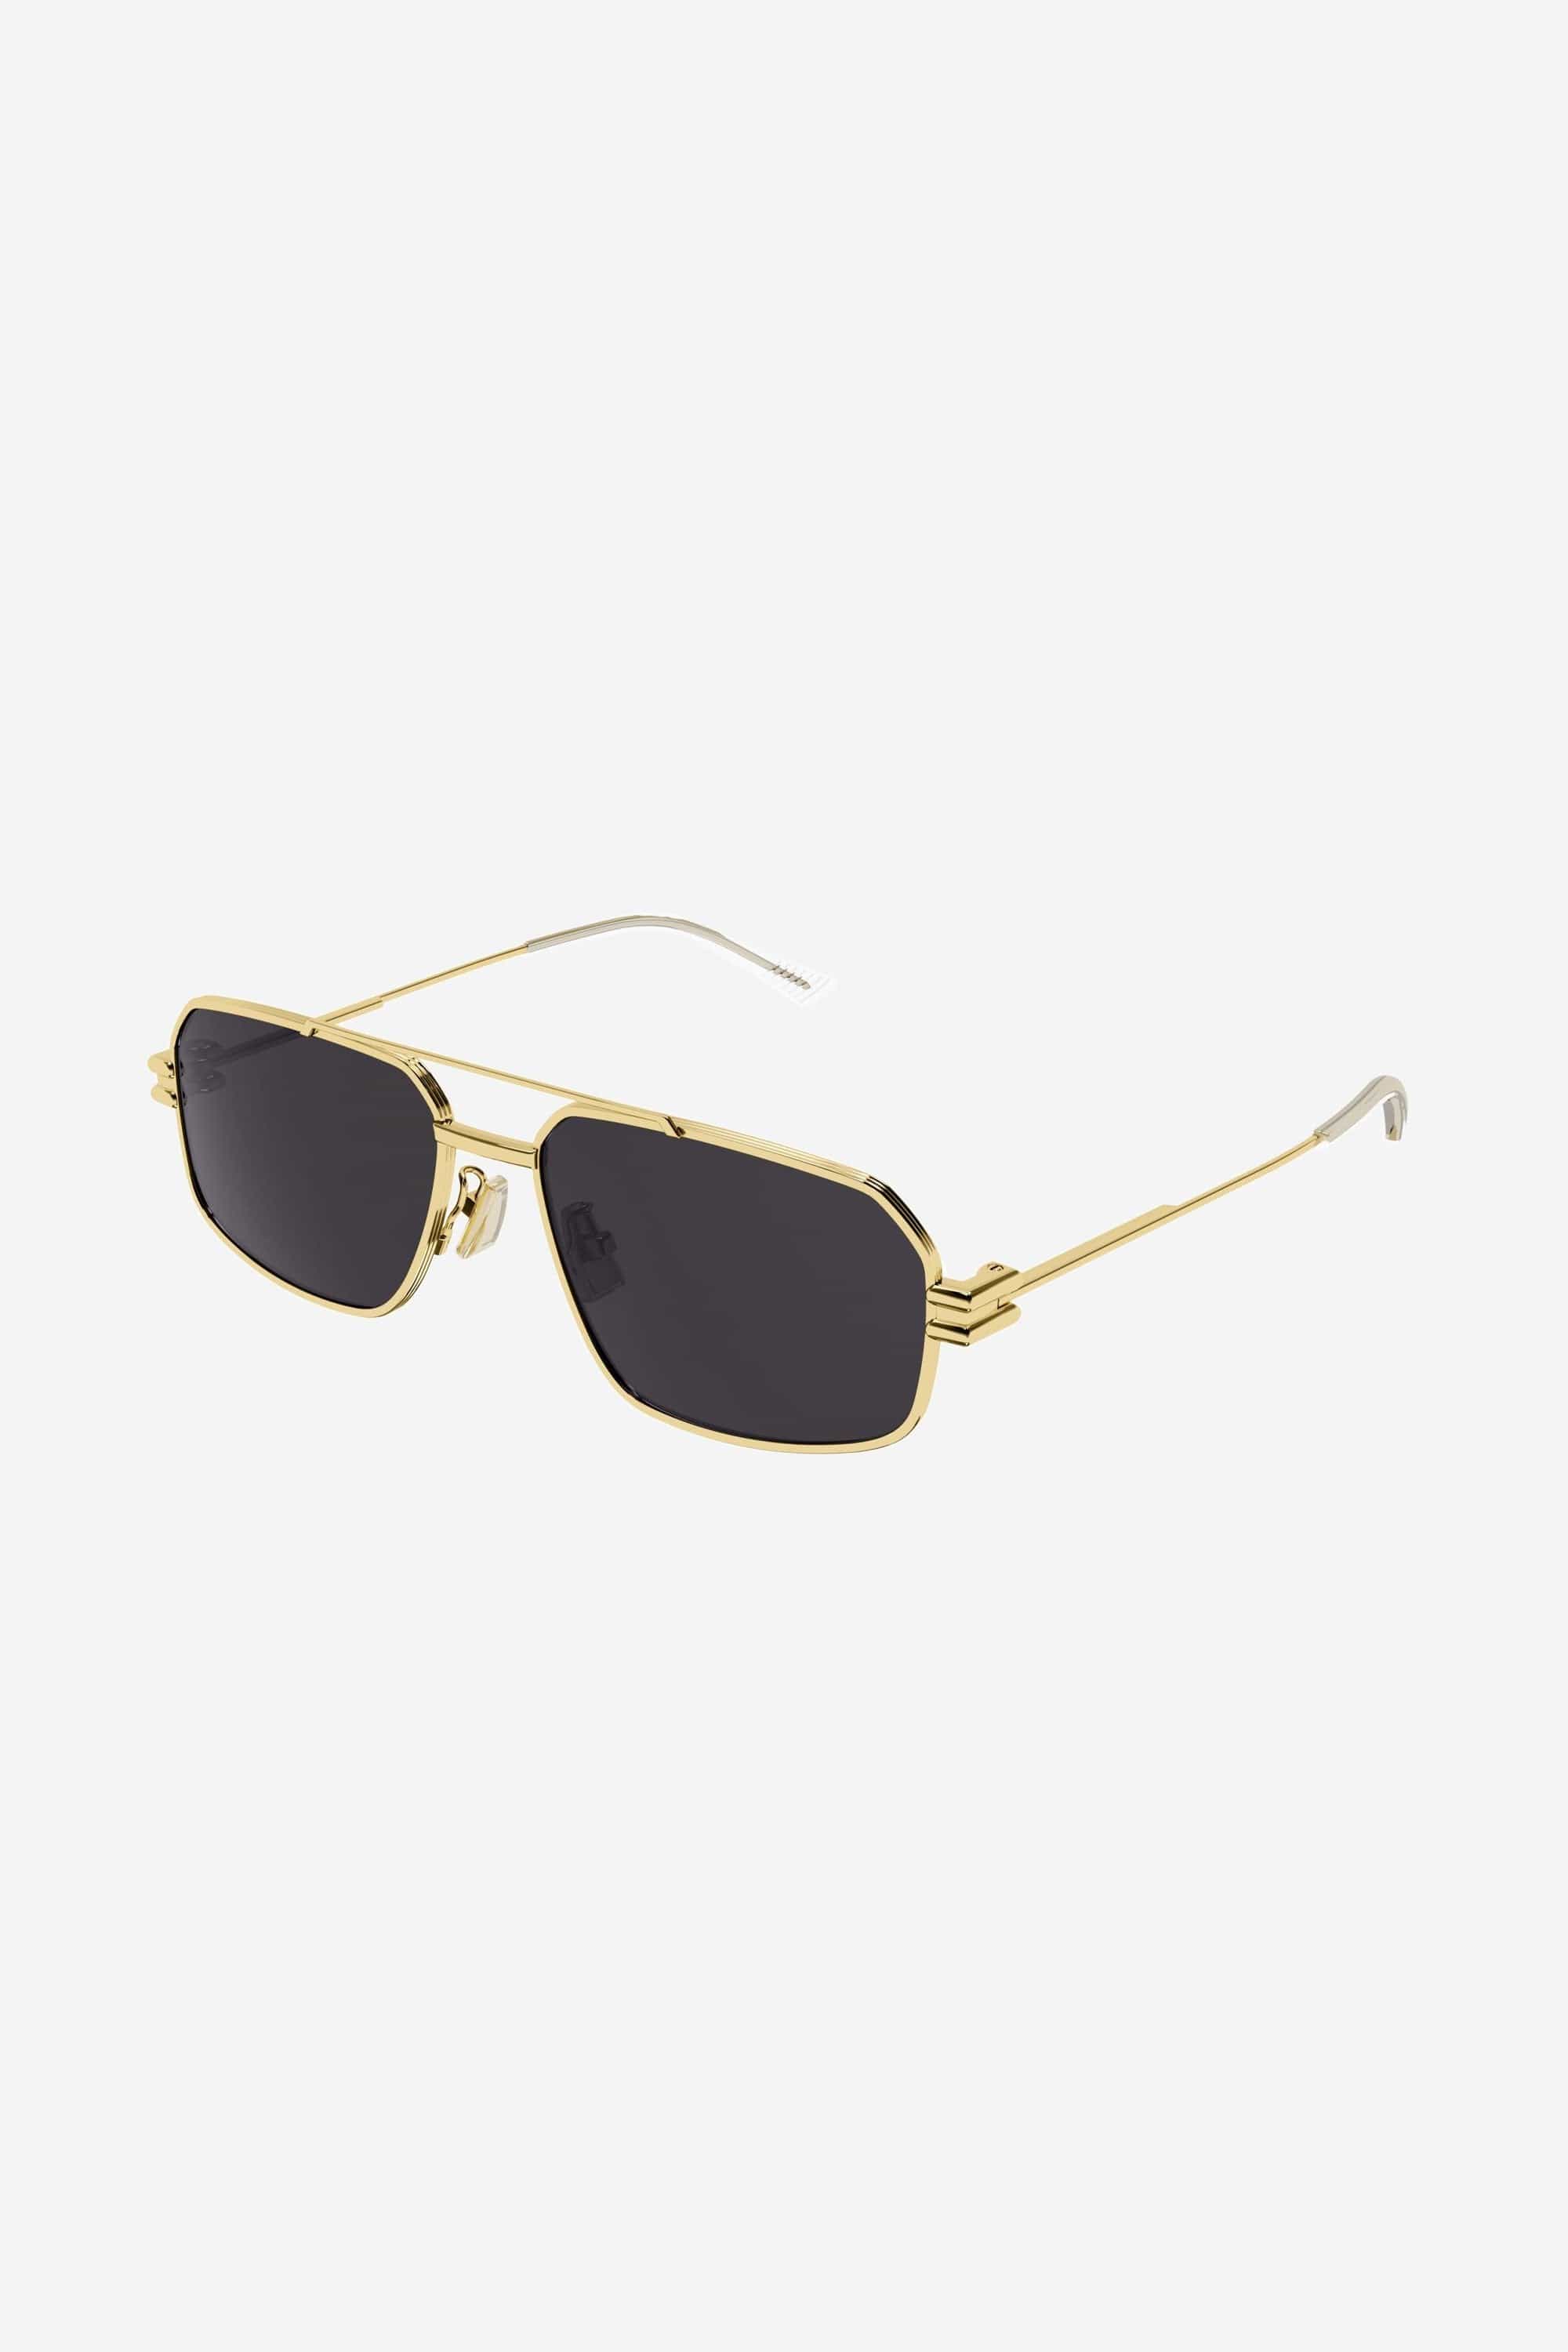 Bottega Veneta full metal caravan gold sunglasses - Eyewear Club